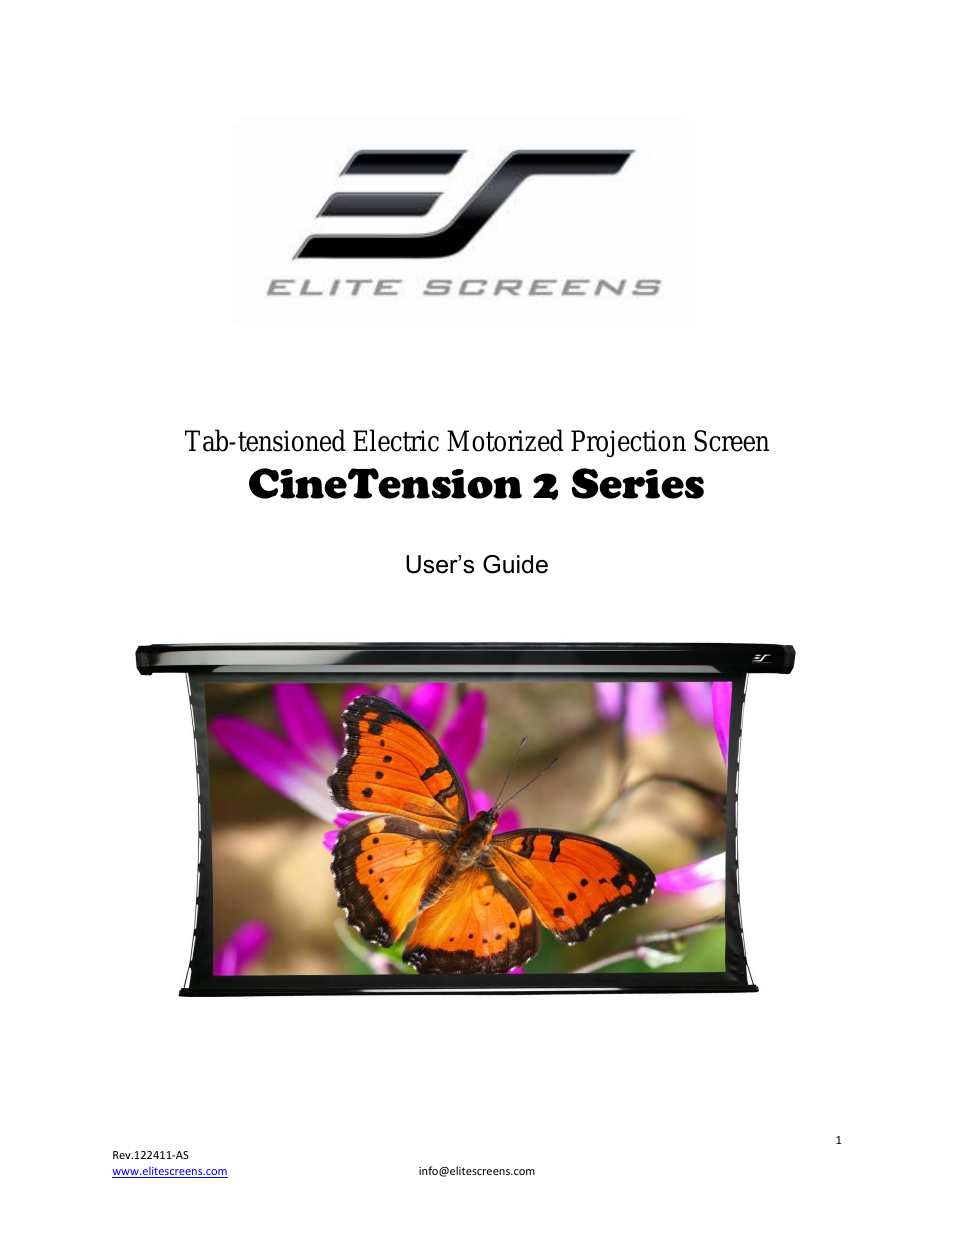 CineTension2 Series